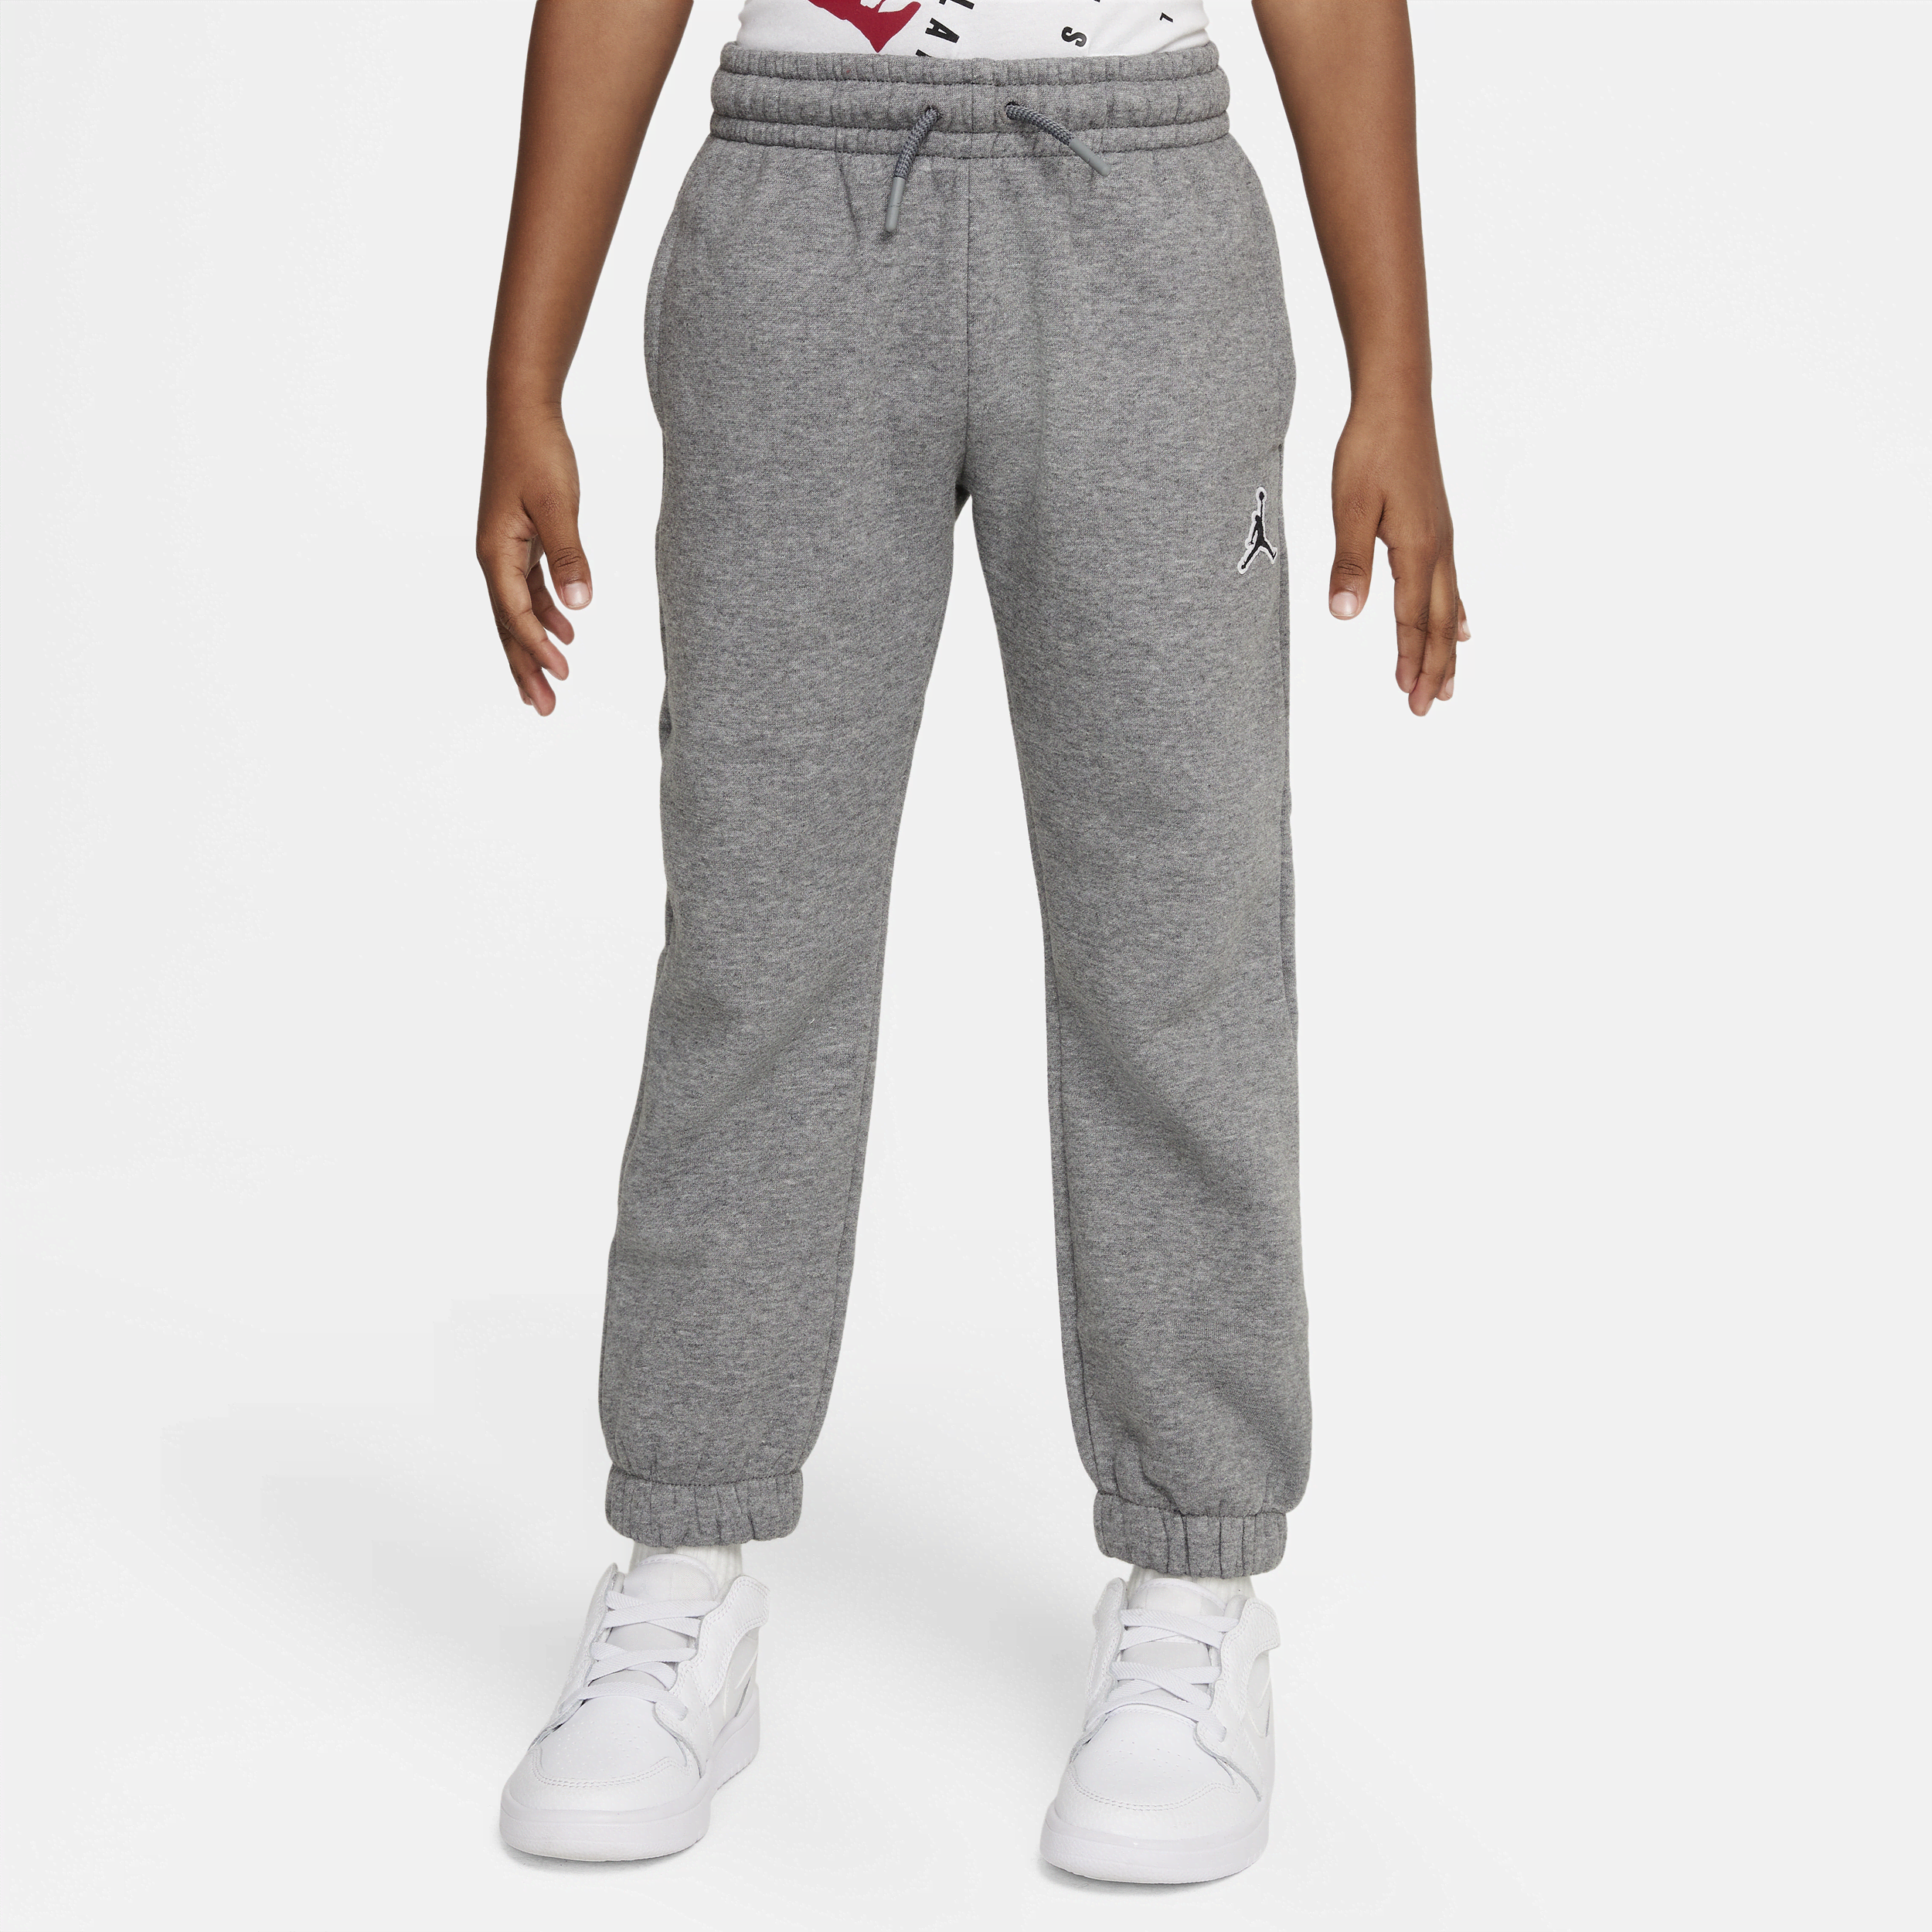 Nike Pantaloni Jordan - Bambini - Grigio